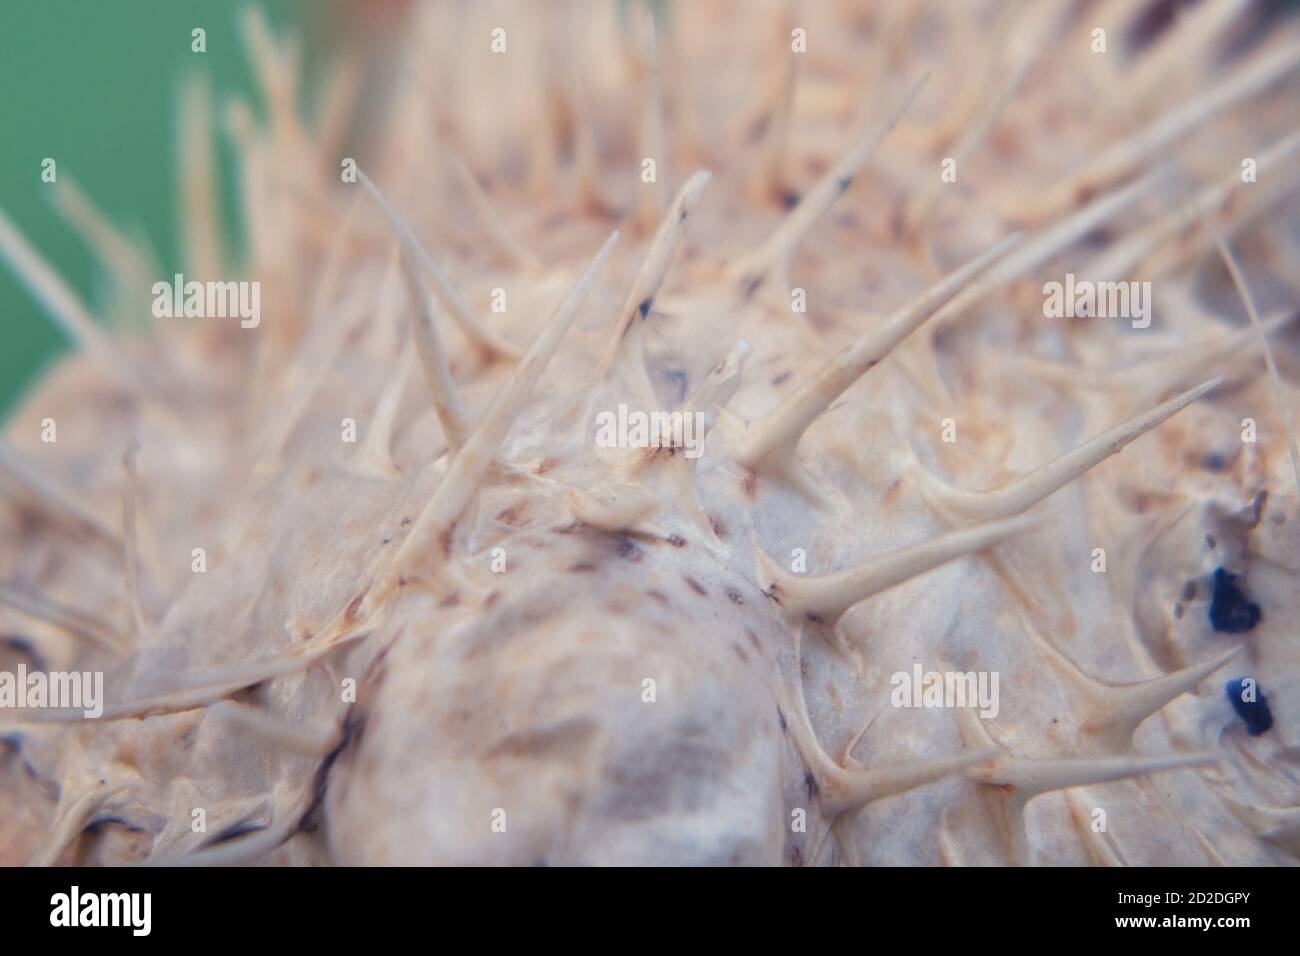 Needle sea fish ball - blowfish. Fish-hedgehog close-up Stock Photo